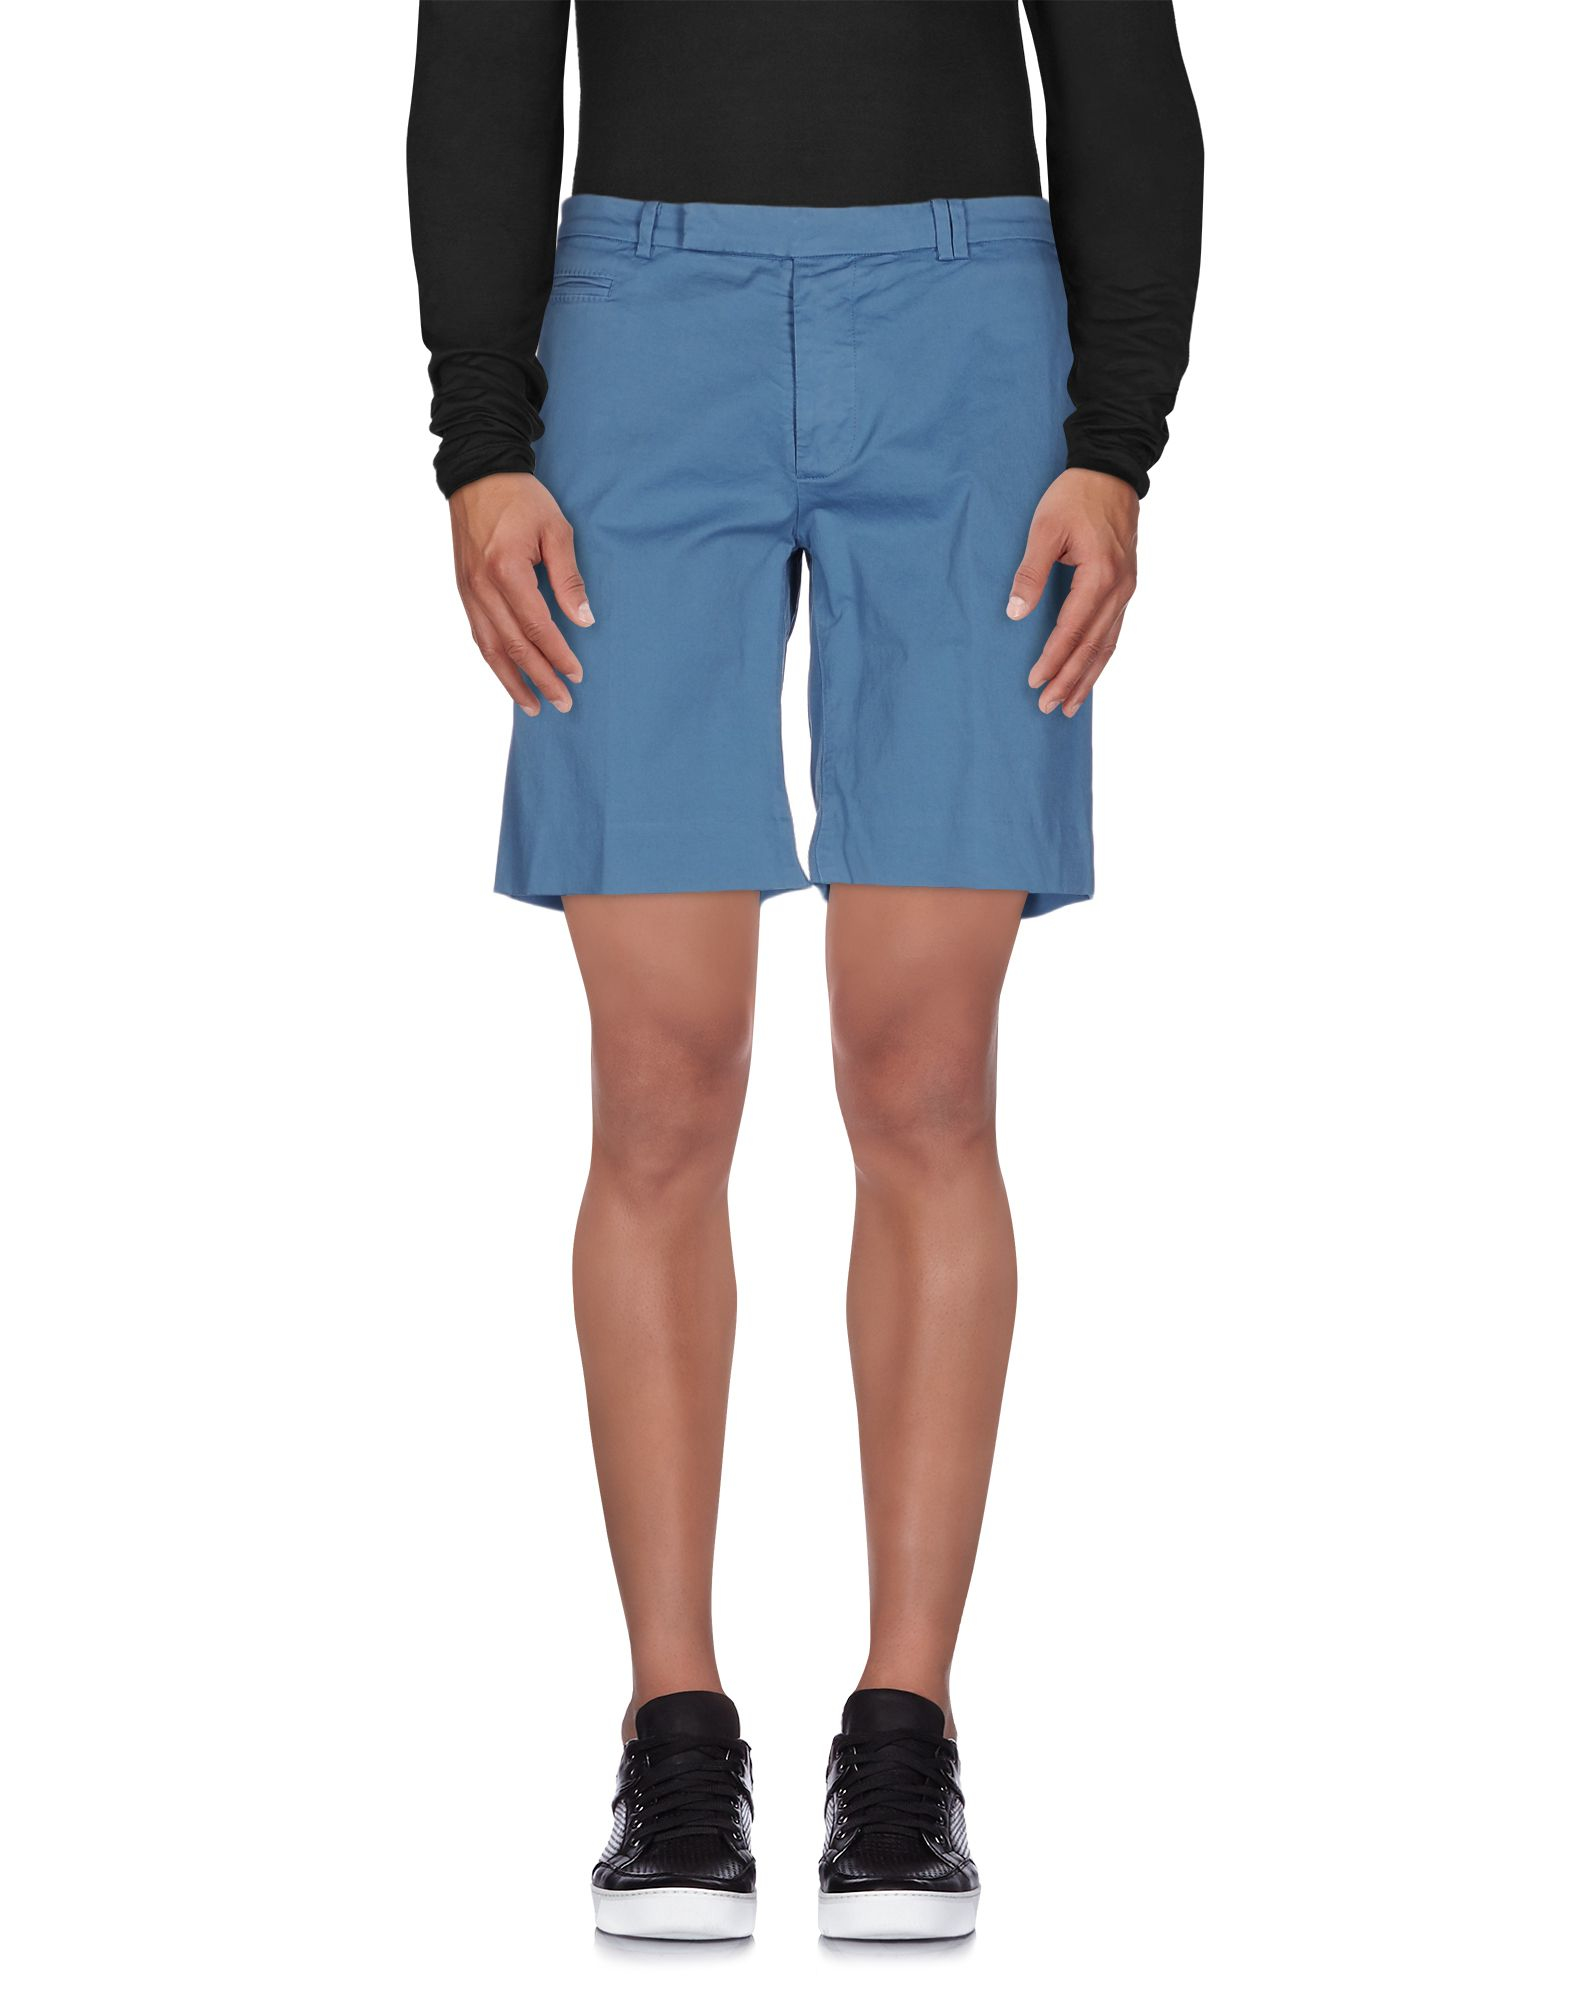 Lyst - Fendi Bermuda Shorts in Blue for Men